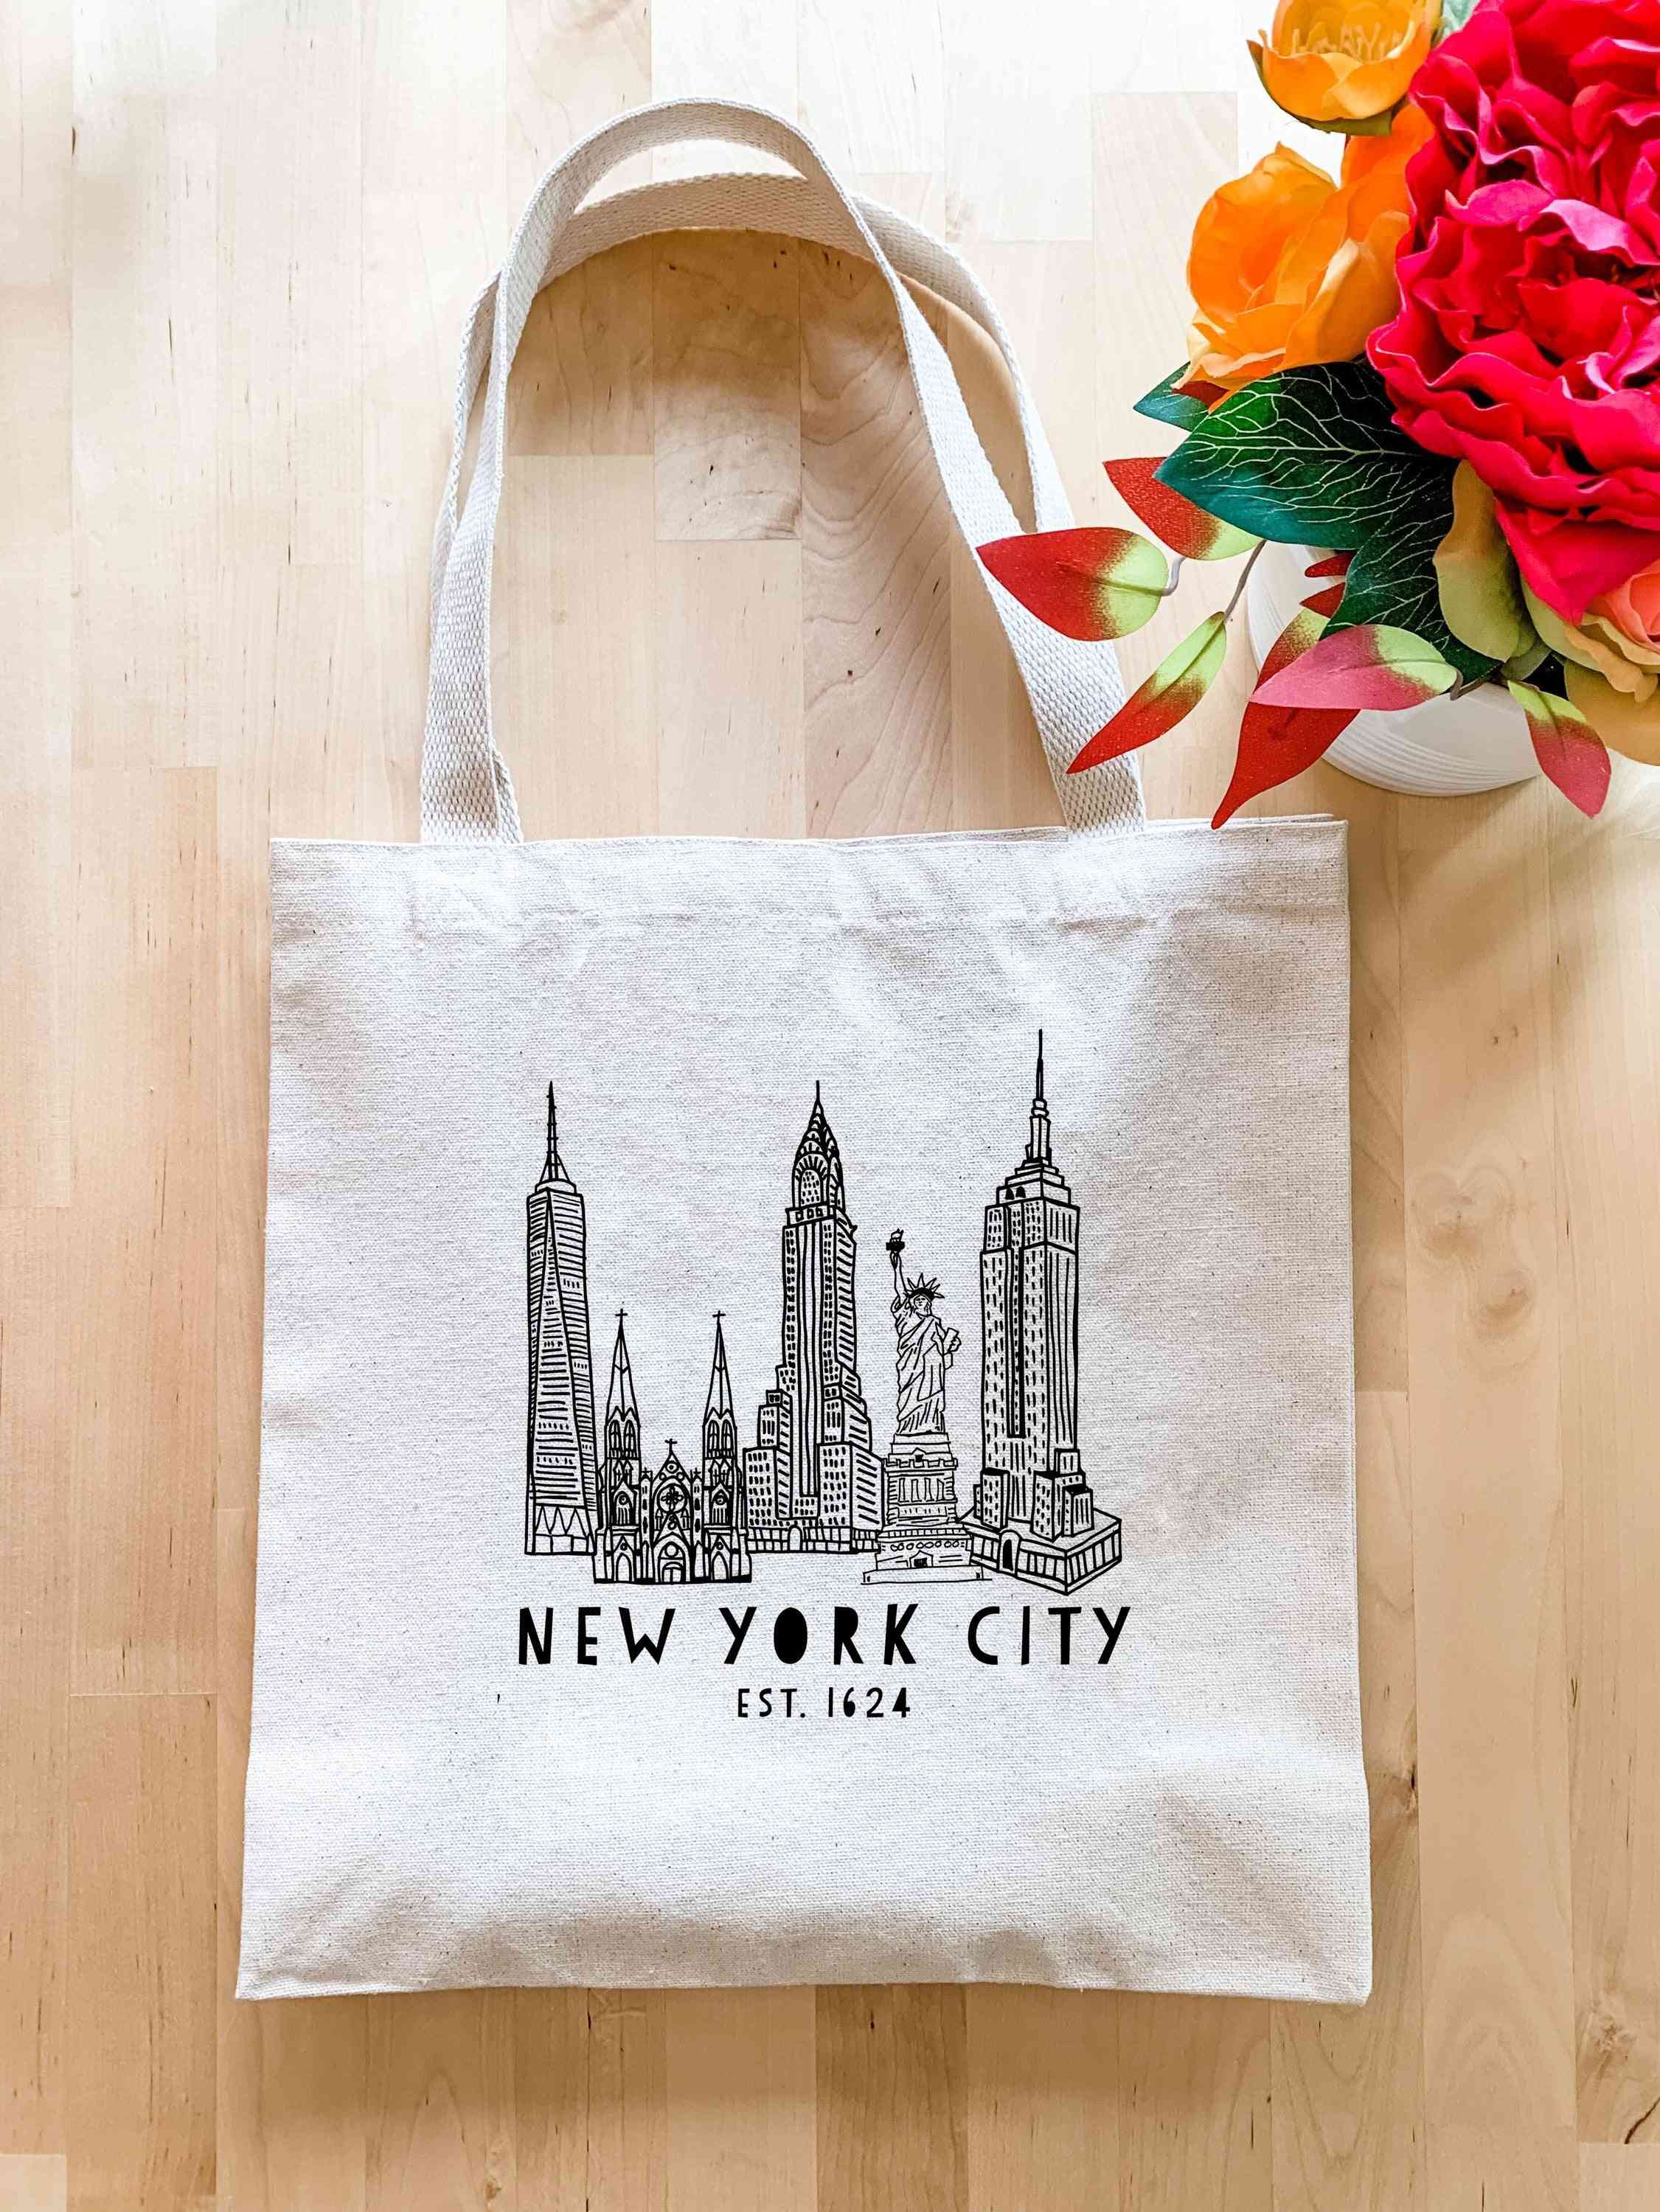 New York City, Nyc - Tote Bag